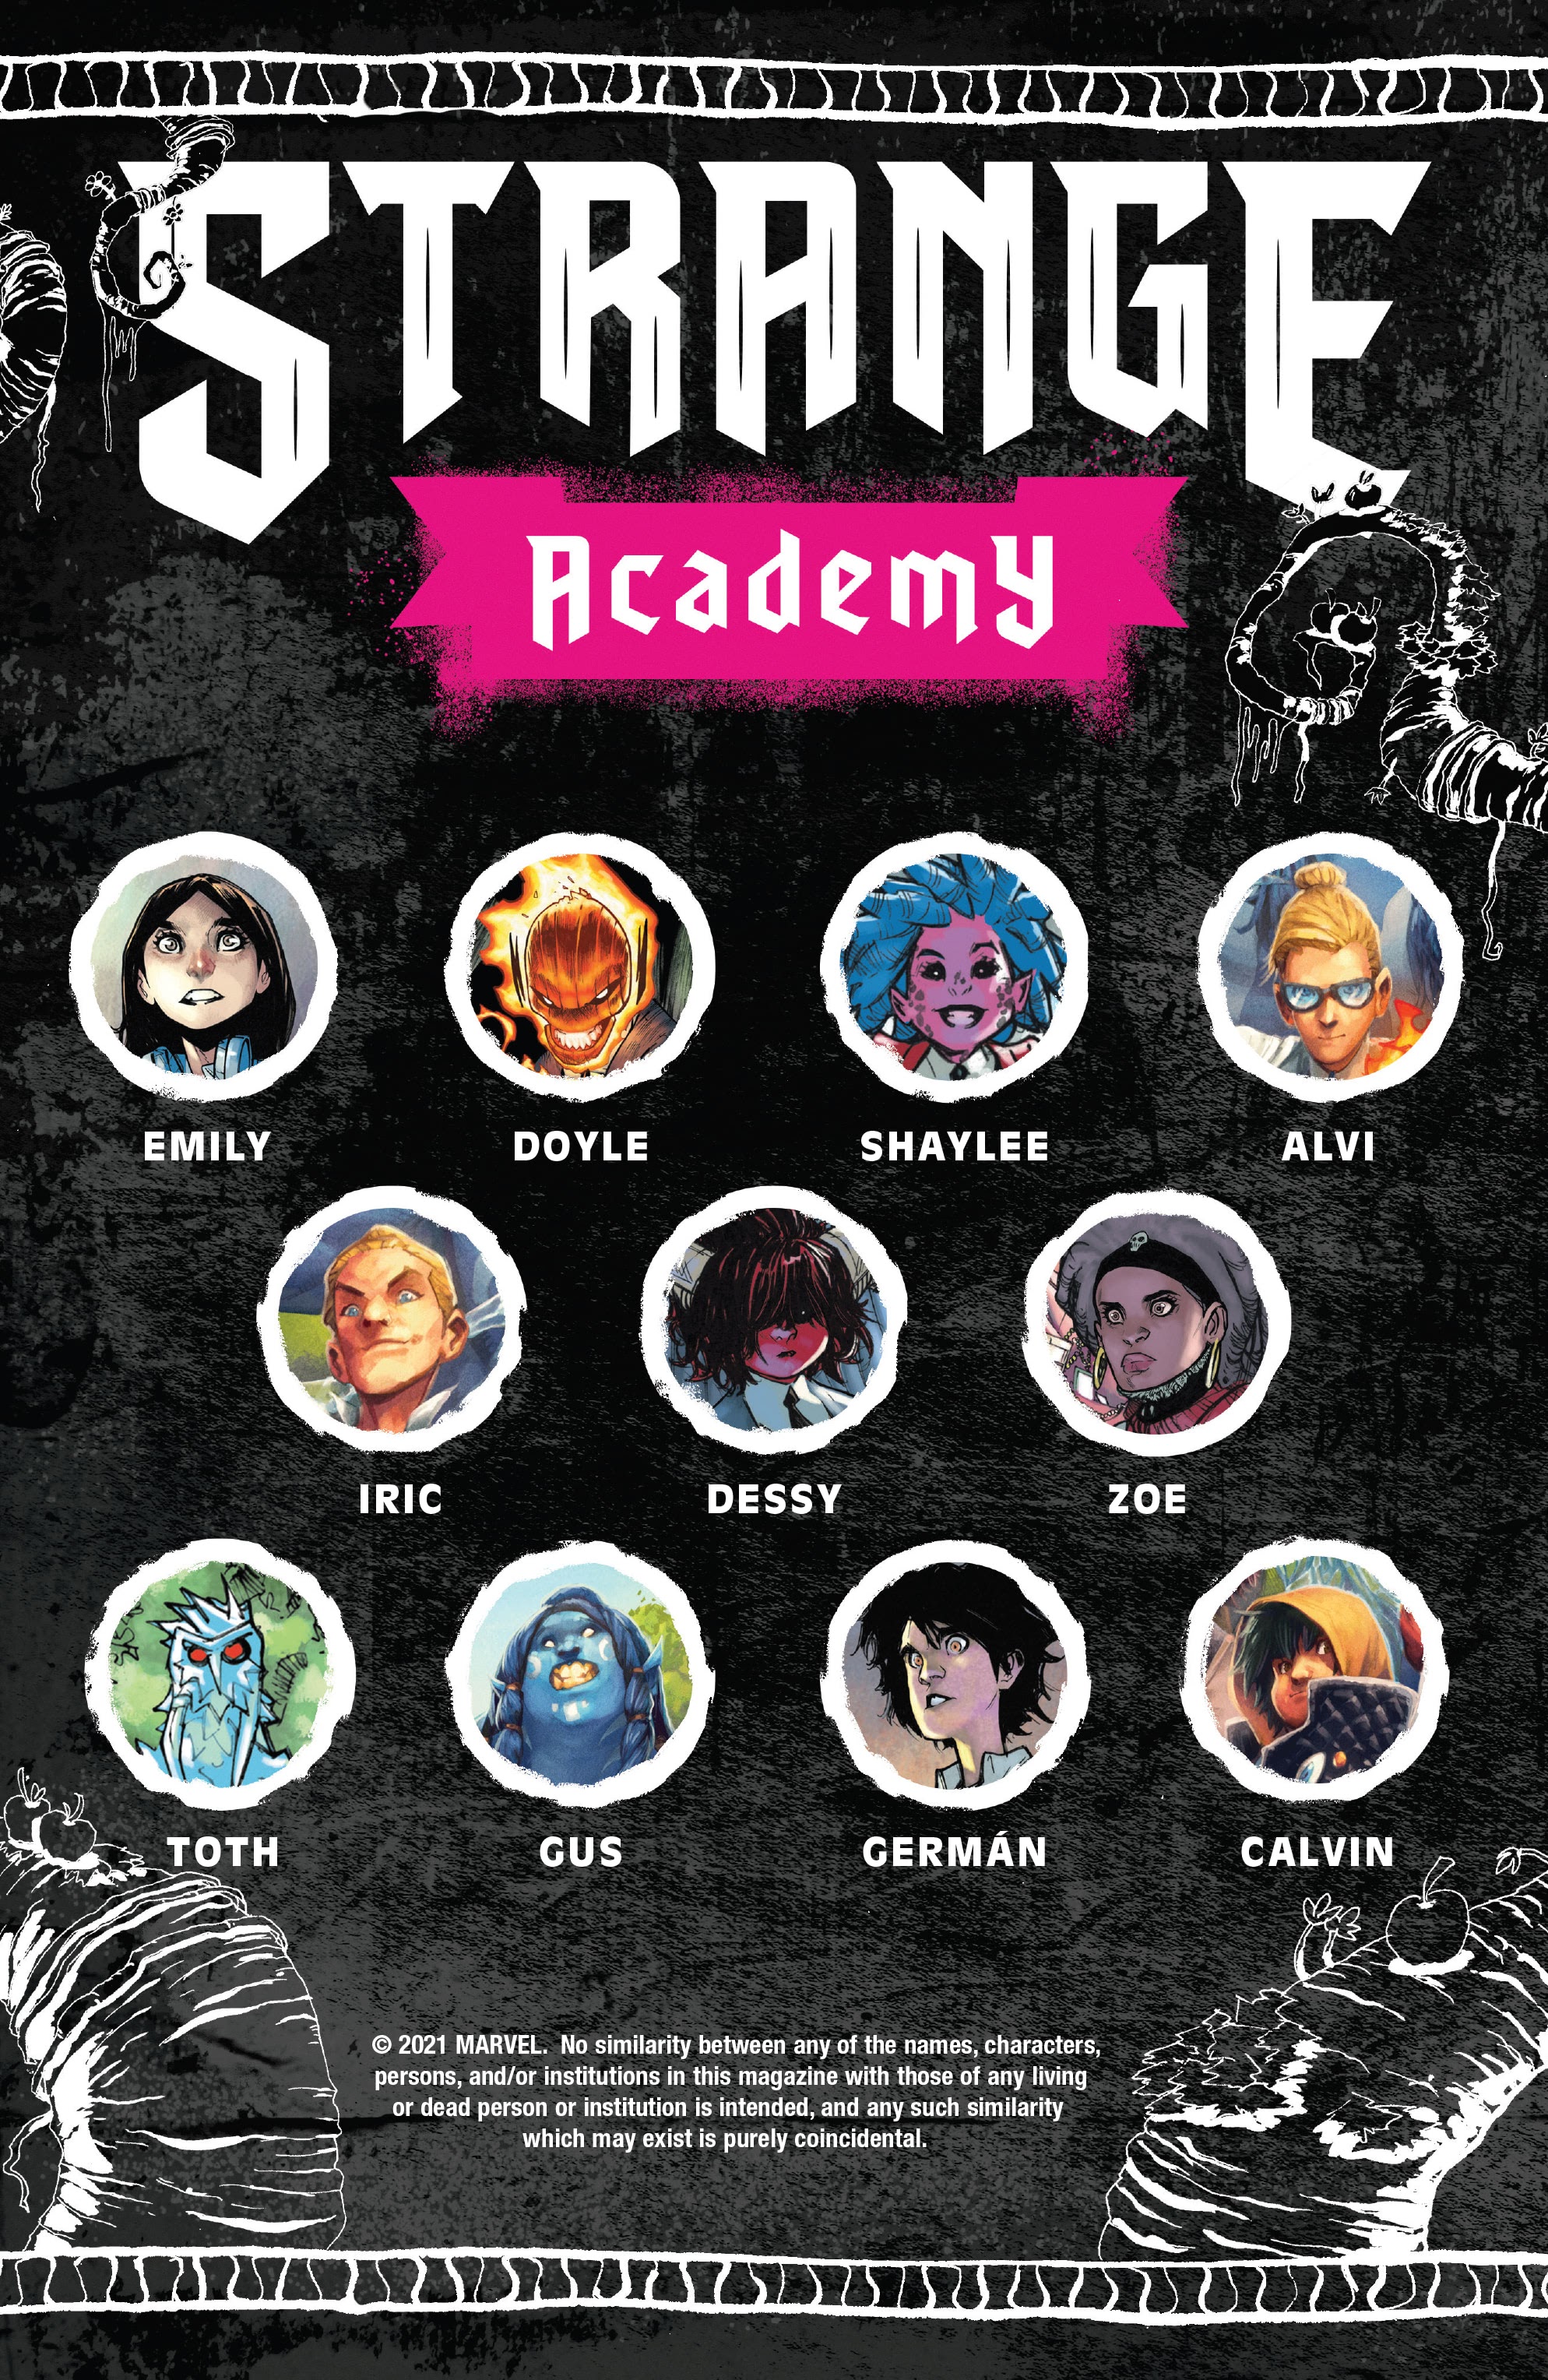 Read online Strange Academy comic -  Issue #14 - 3